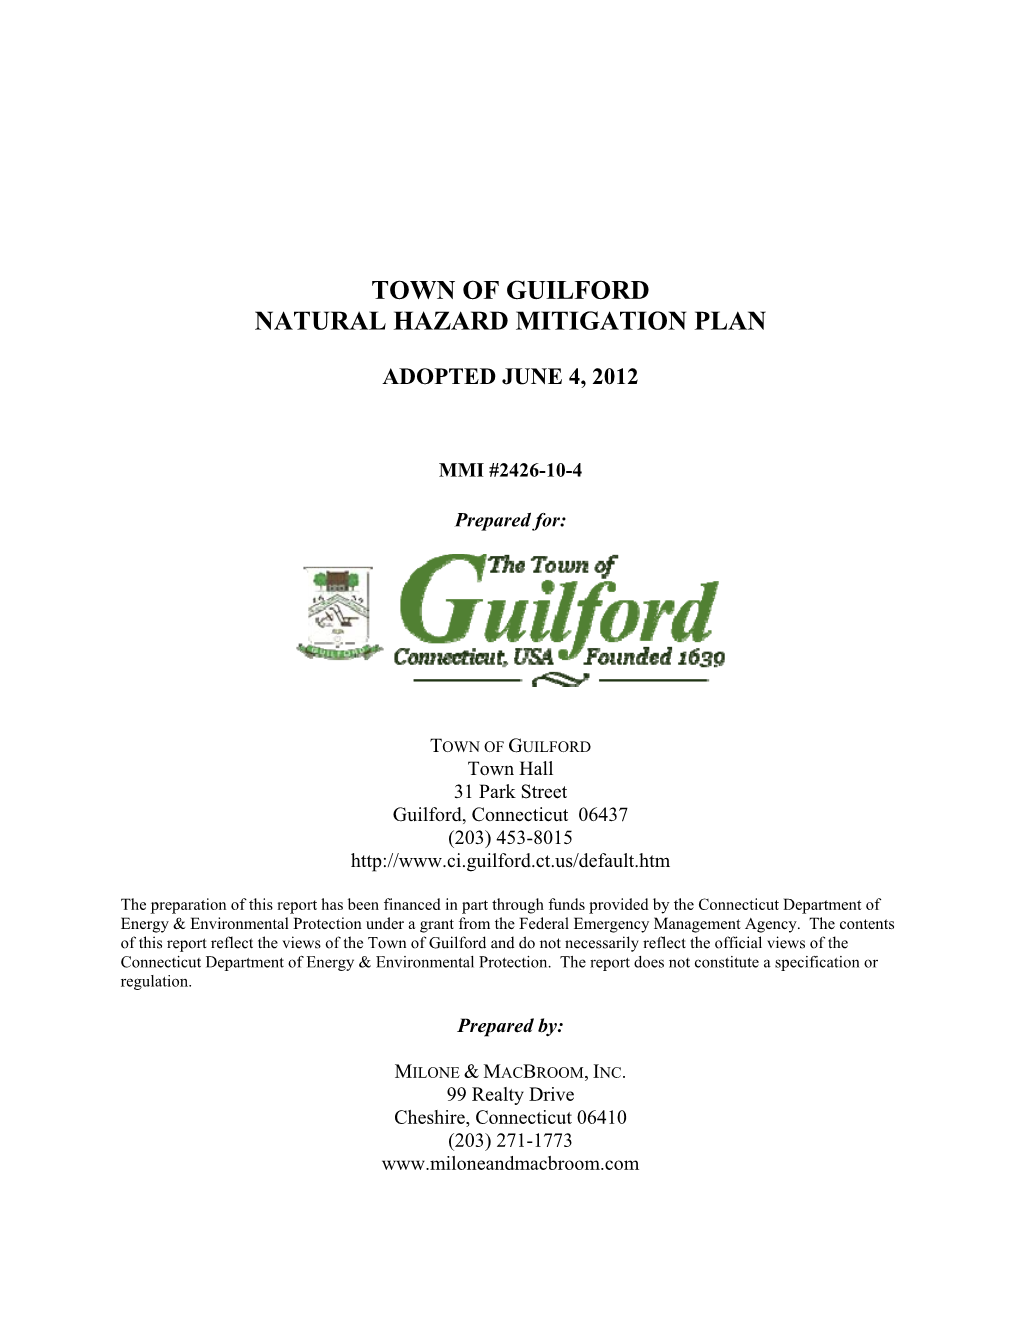 Town of Guilford Natural Hazard Mitigation Plan